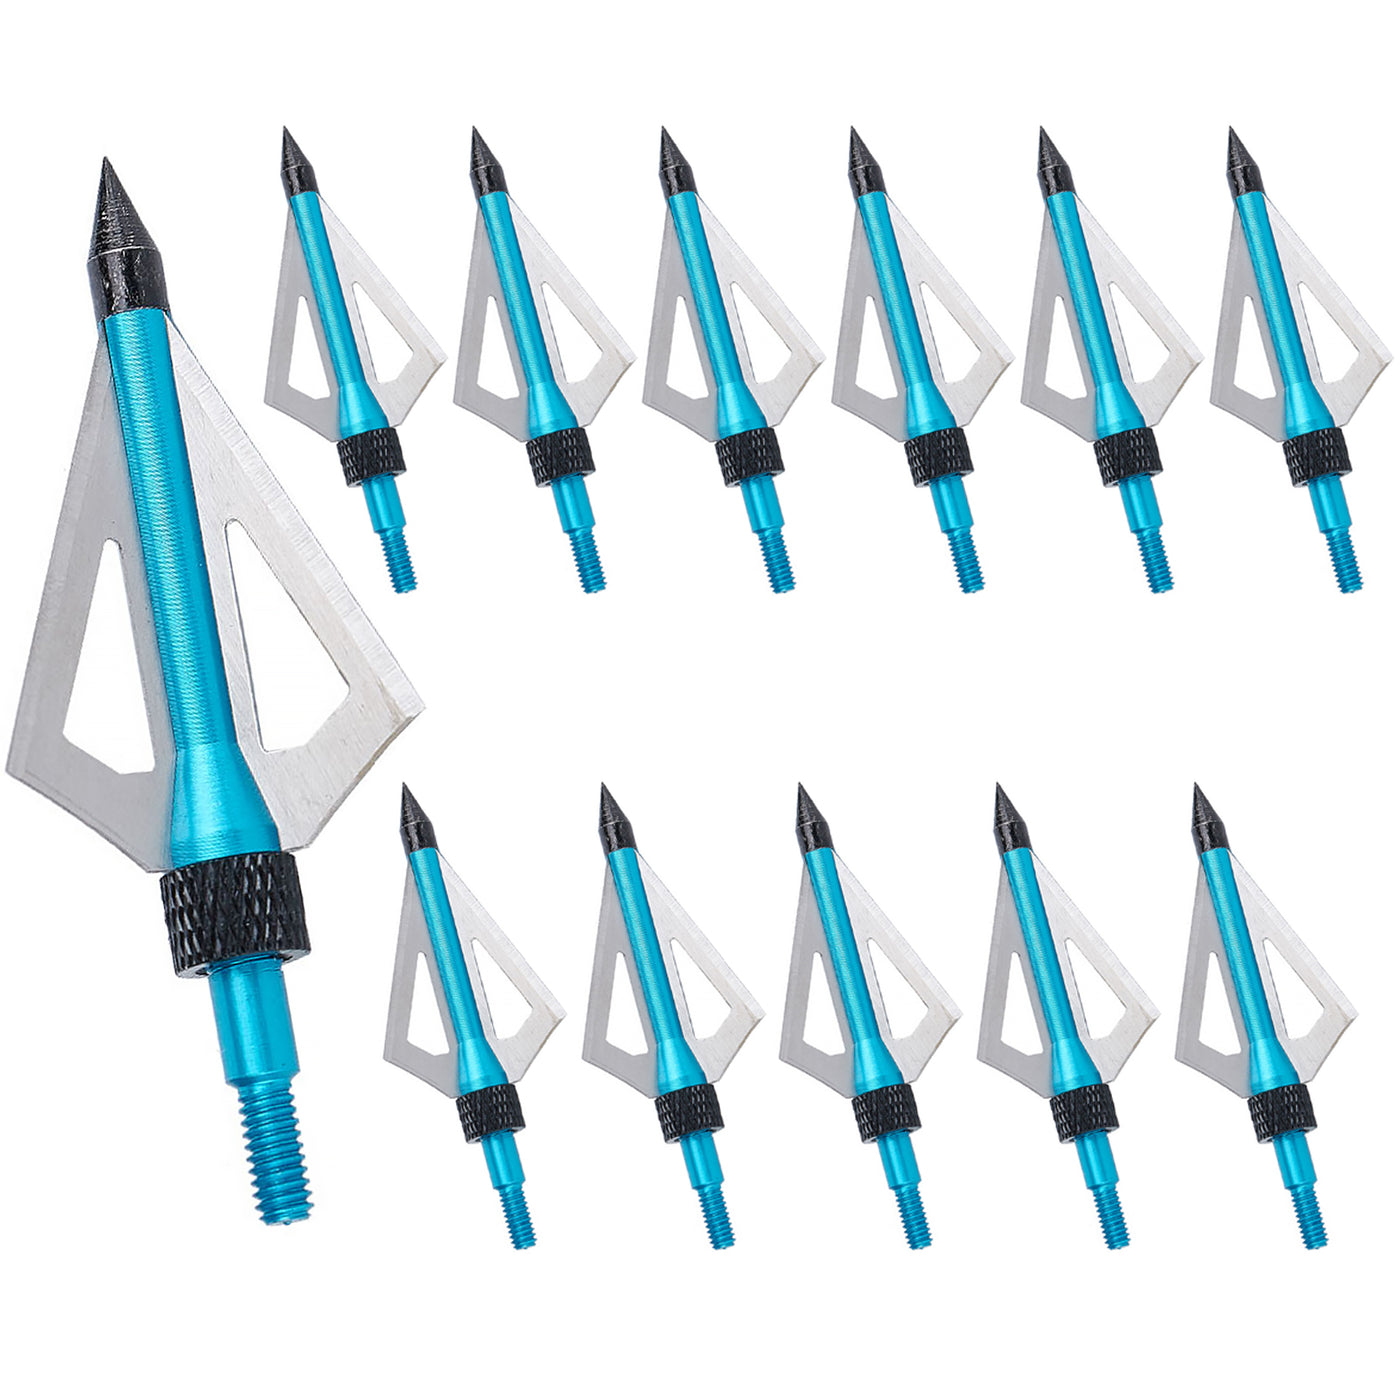 12x 100-grain Blue/Silver 3-blade Screw-In Broadheads for Archery Hunting